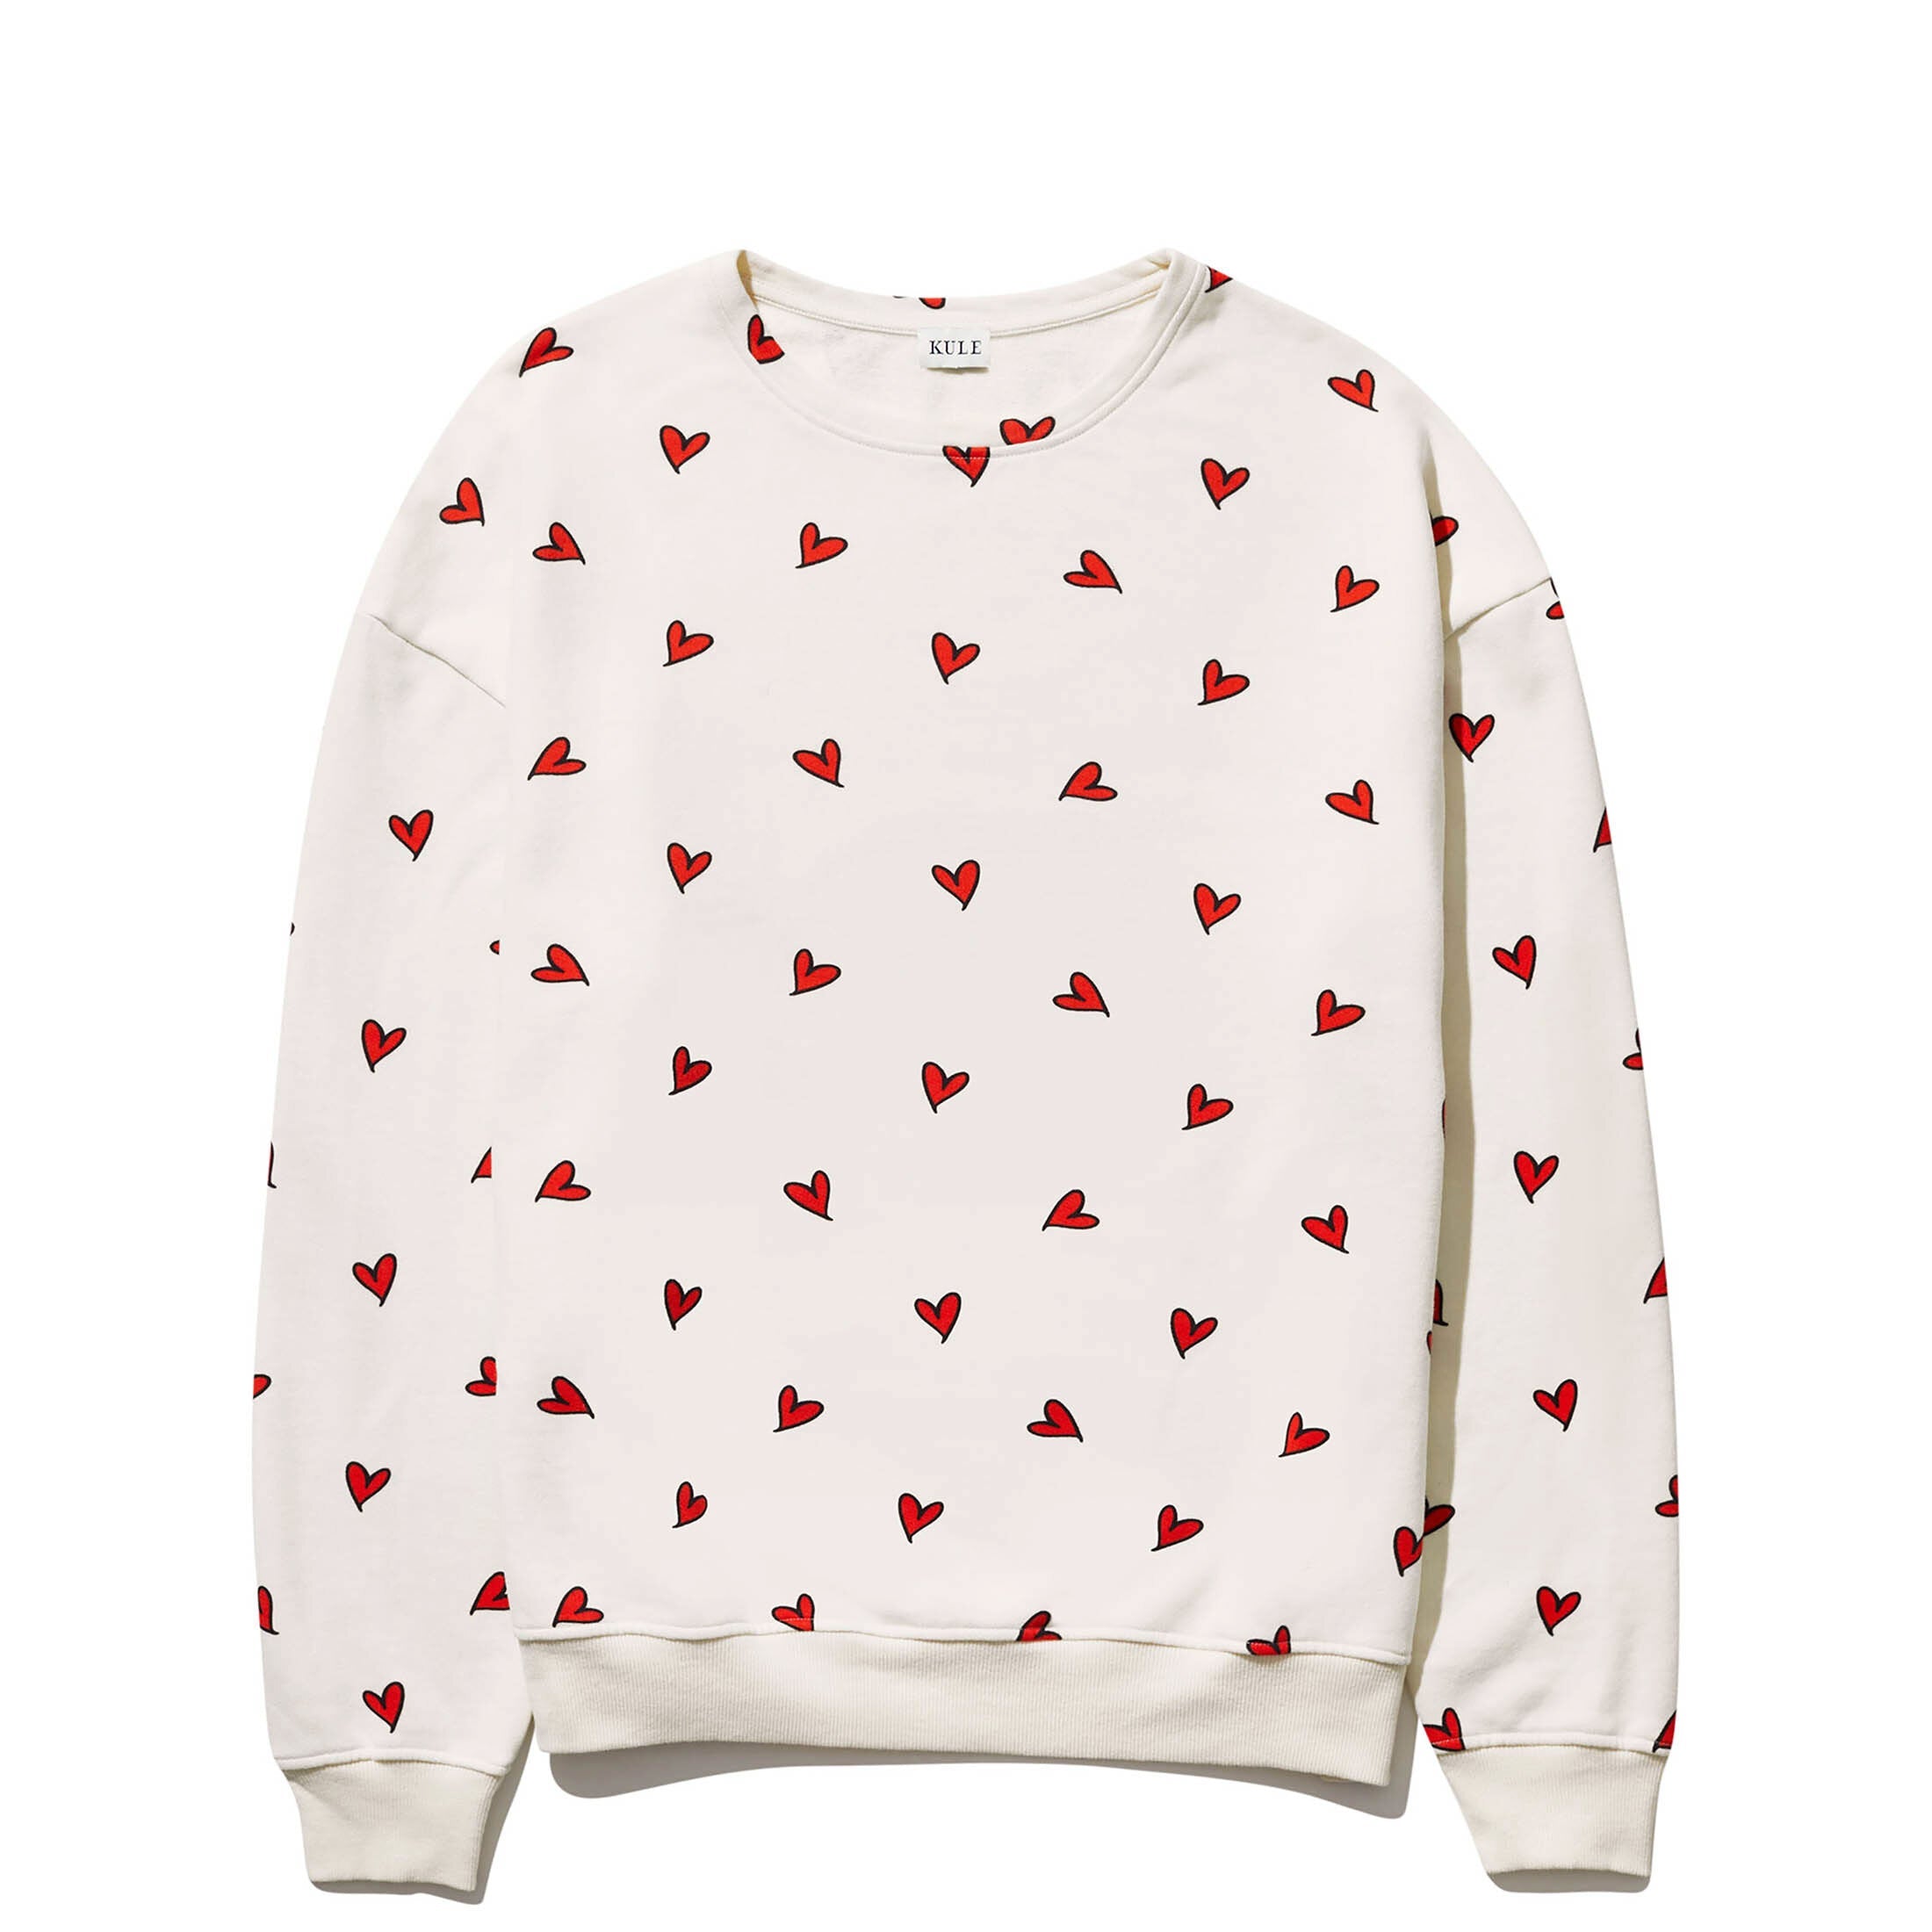 The Oversized All Over Heart Sweatshirt - Cream/Red